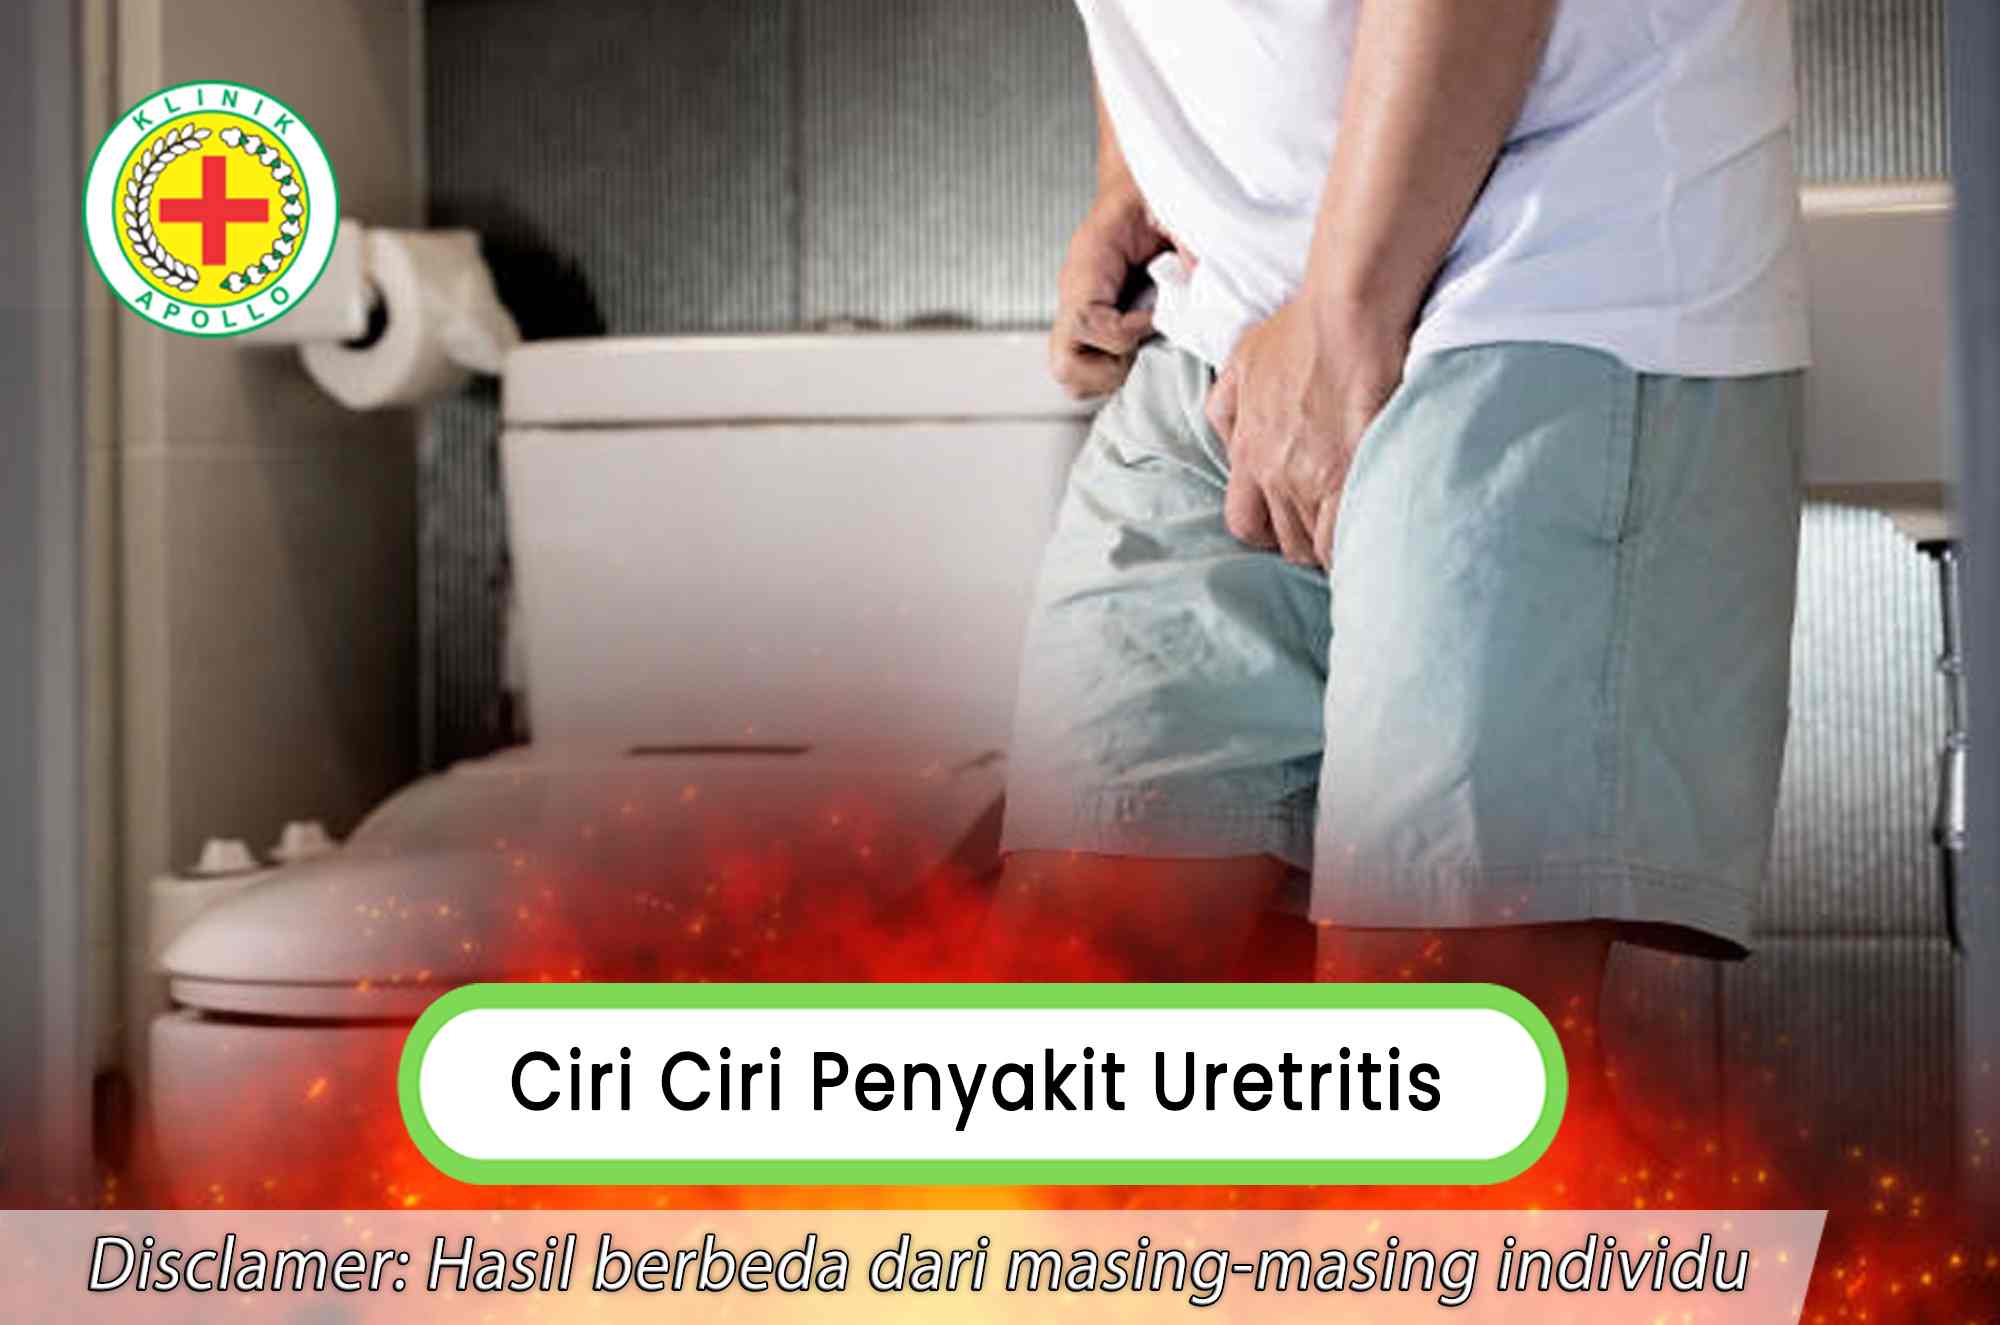 Sebelum melakukan pengobatan lebih lanjut, kenali ciri ciri penyakit uretritis lebih rinci.